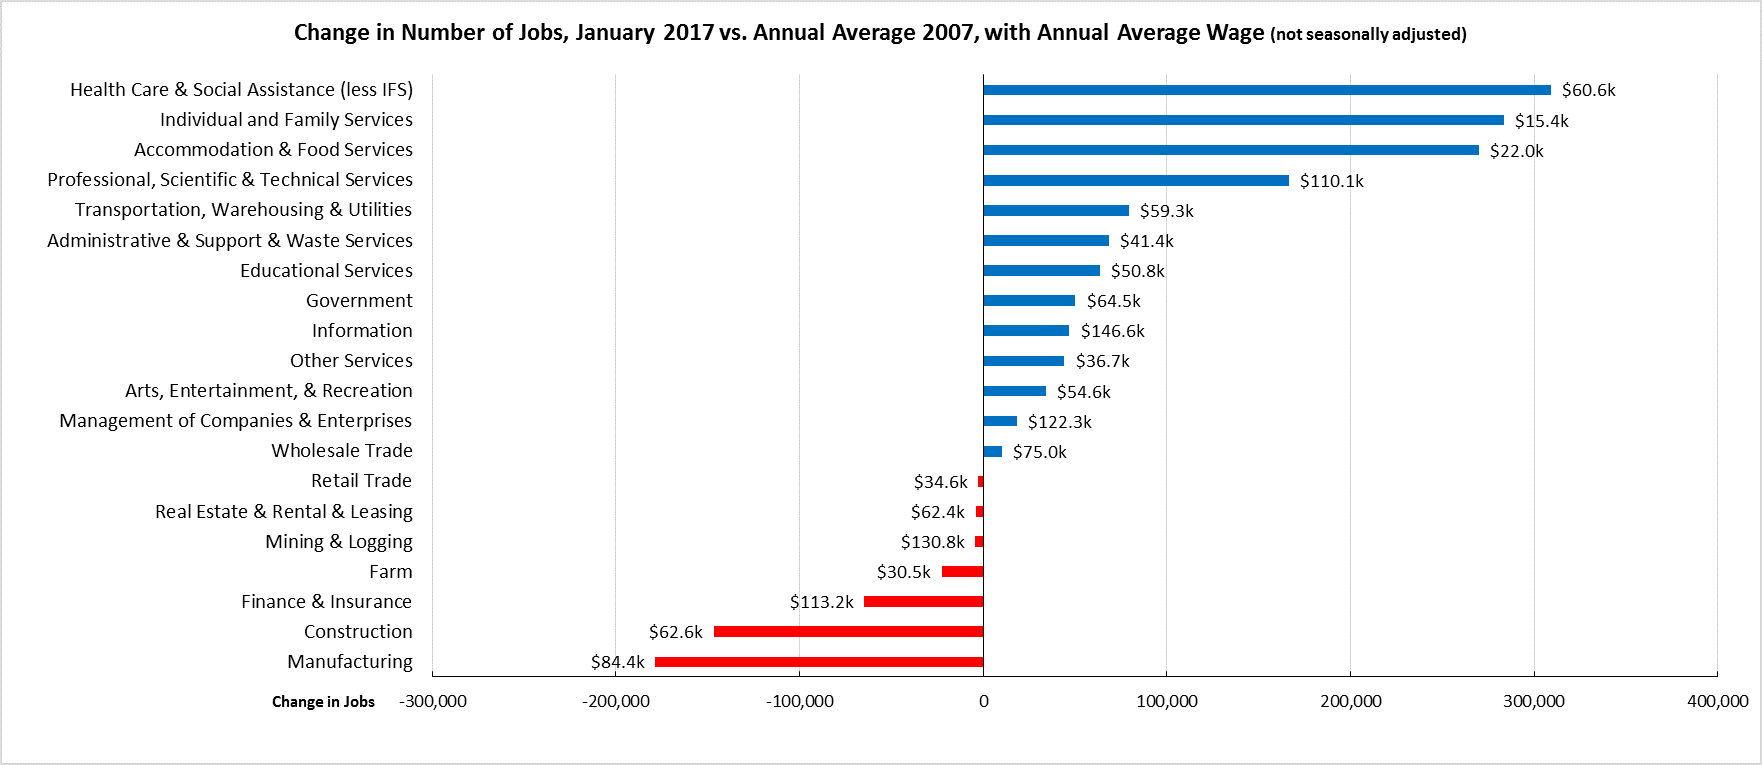 Change in Number of Jobs Jan 2017